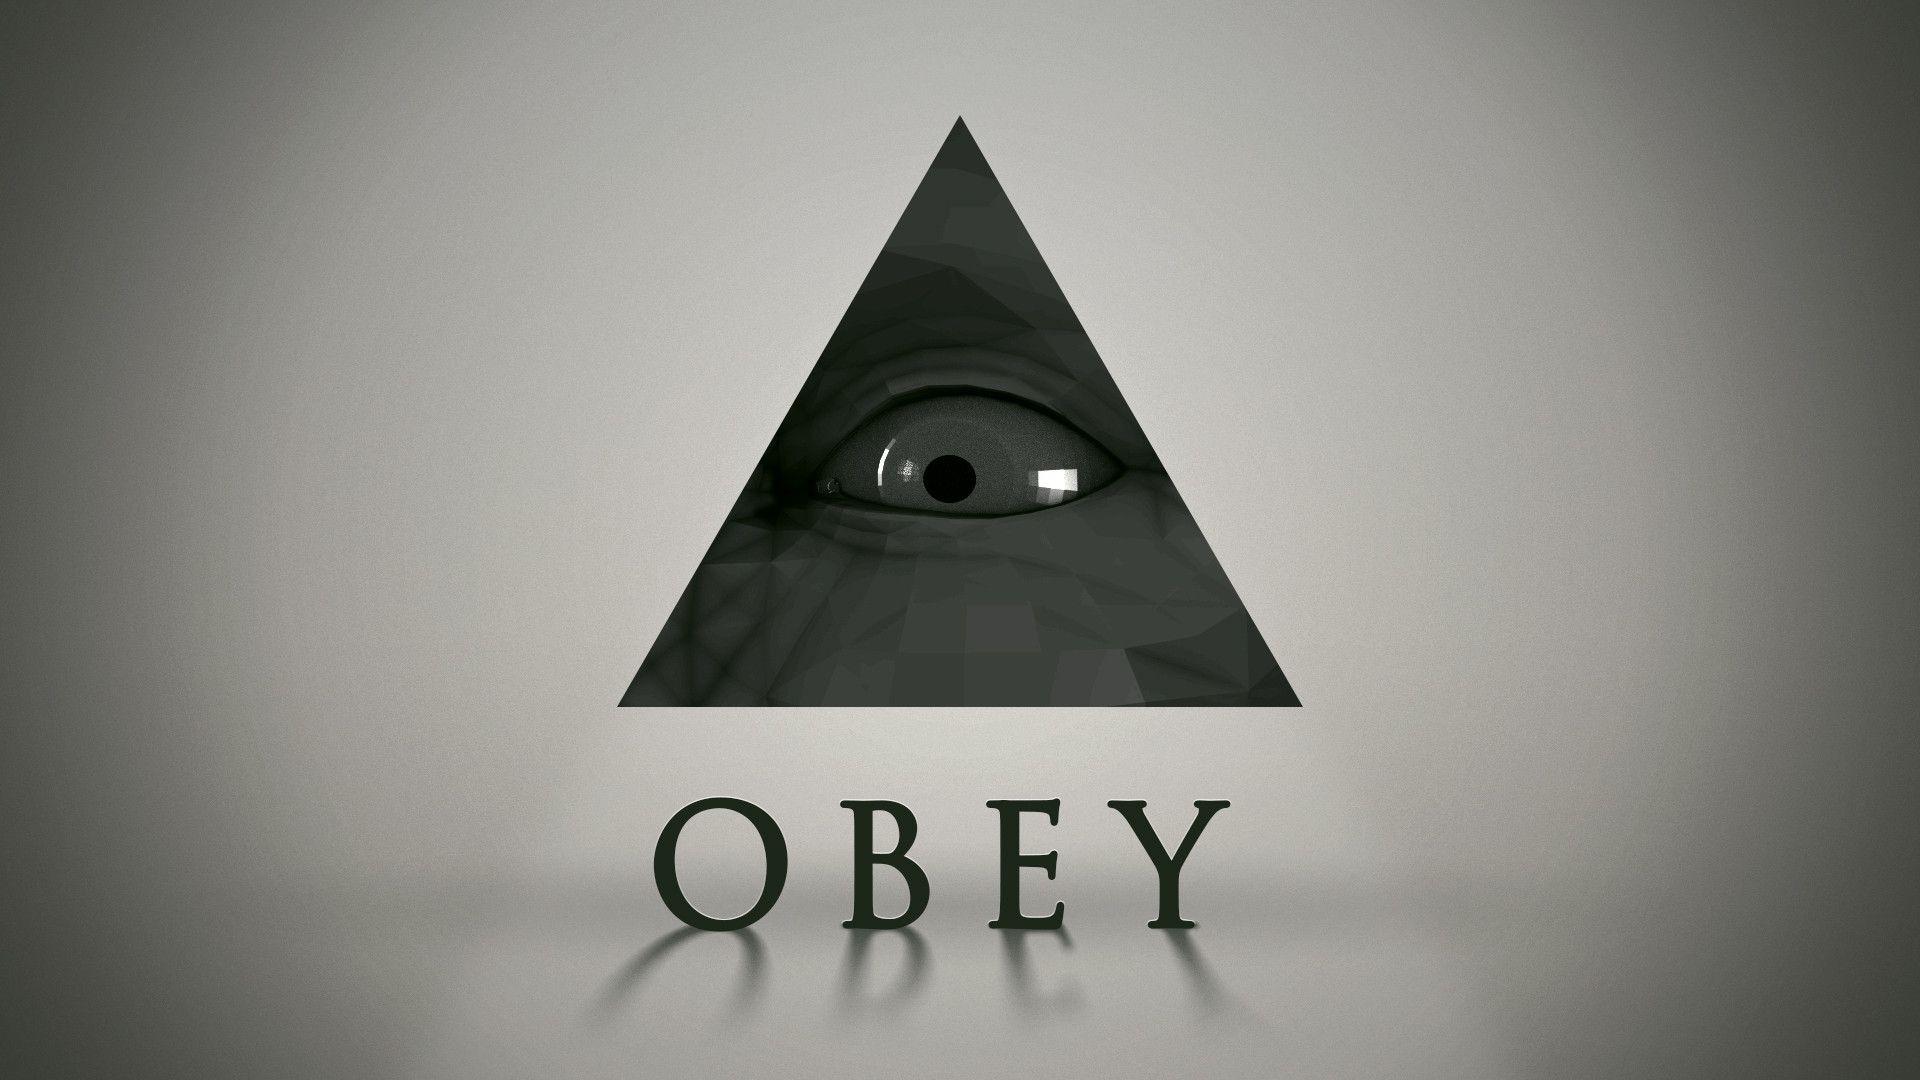 Obey. [1920x1080]